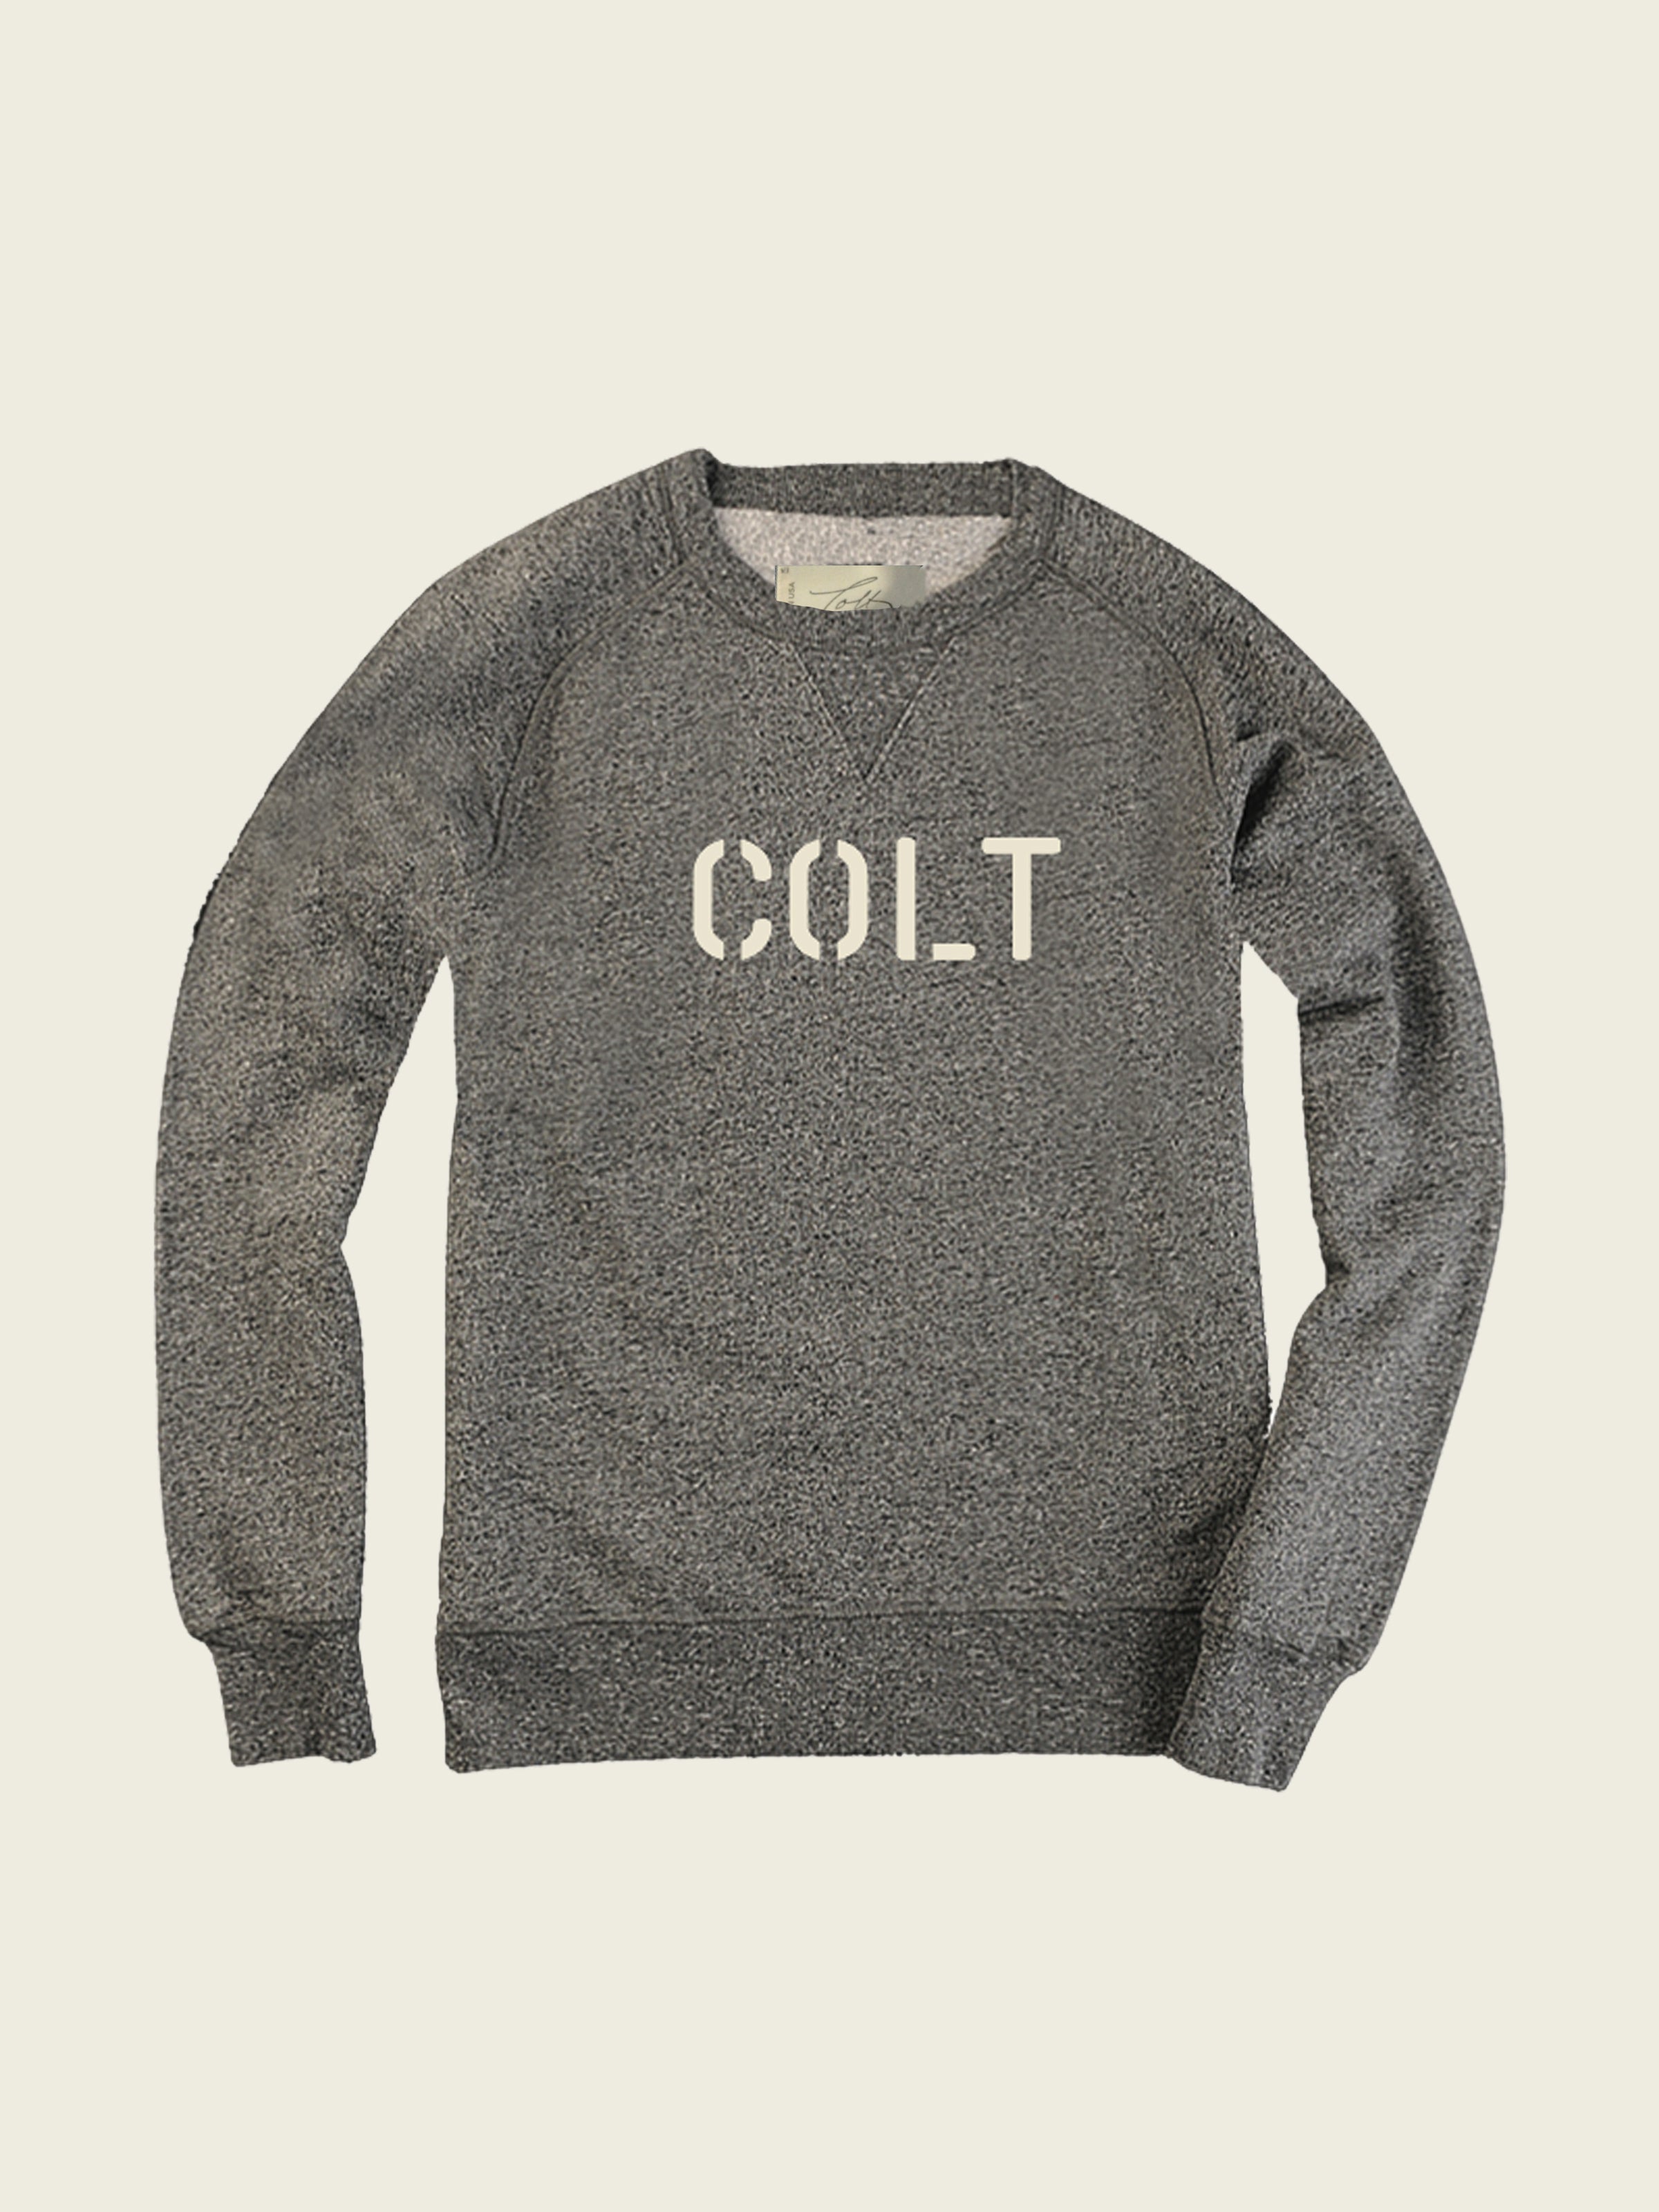 Colt Stencil Print Logo Raglan Sweatshirt in Salt & Pepper